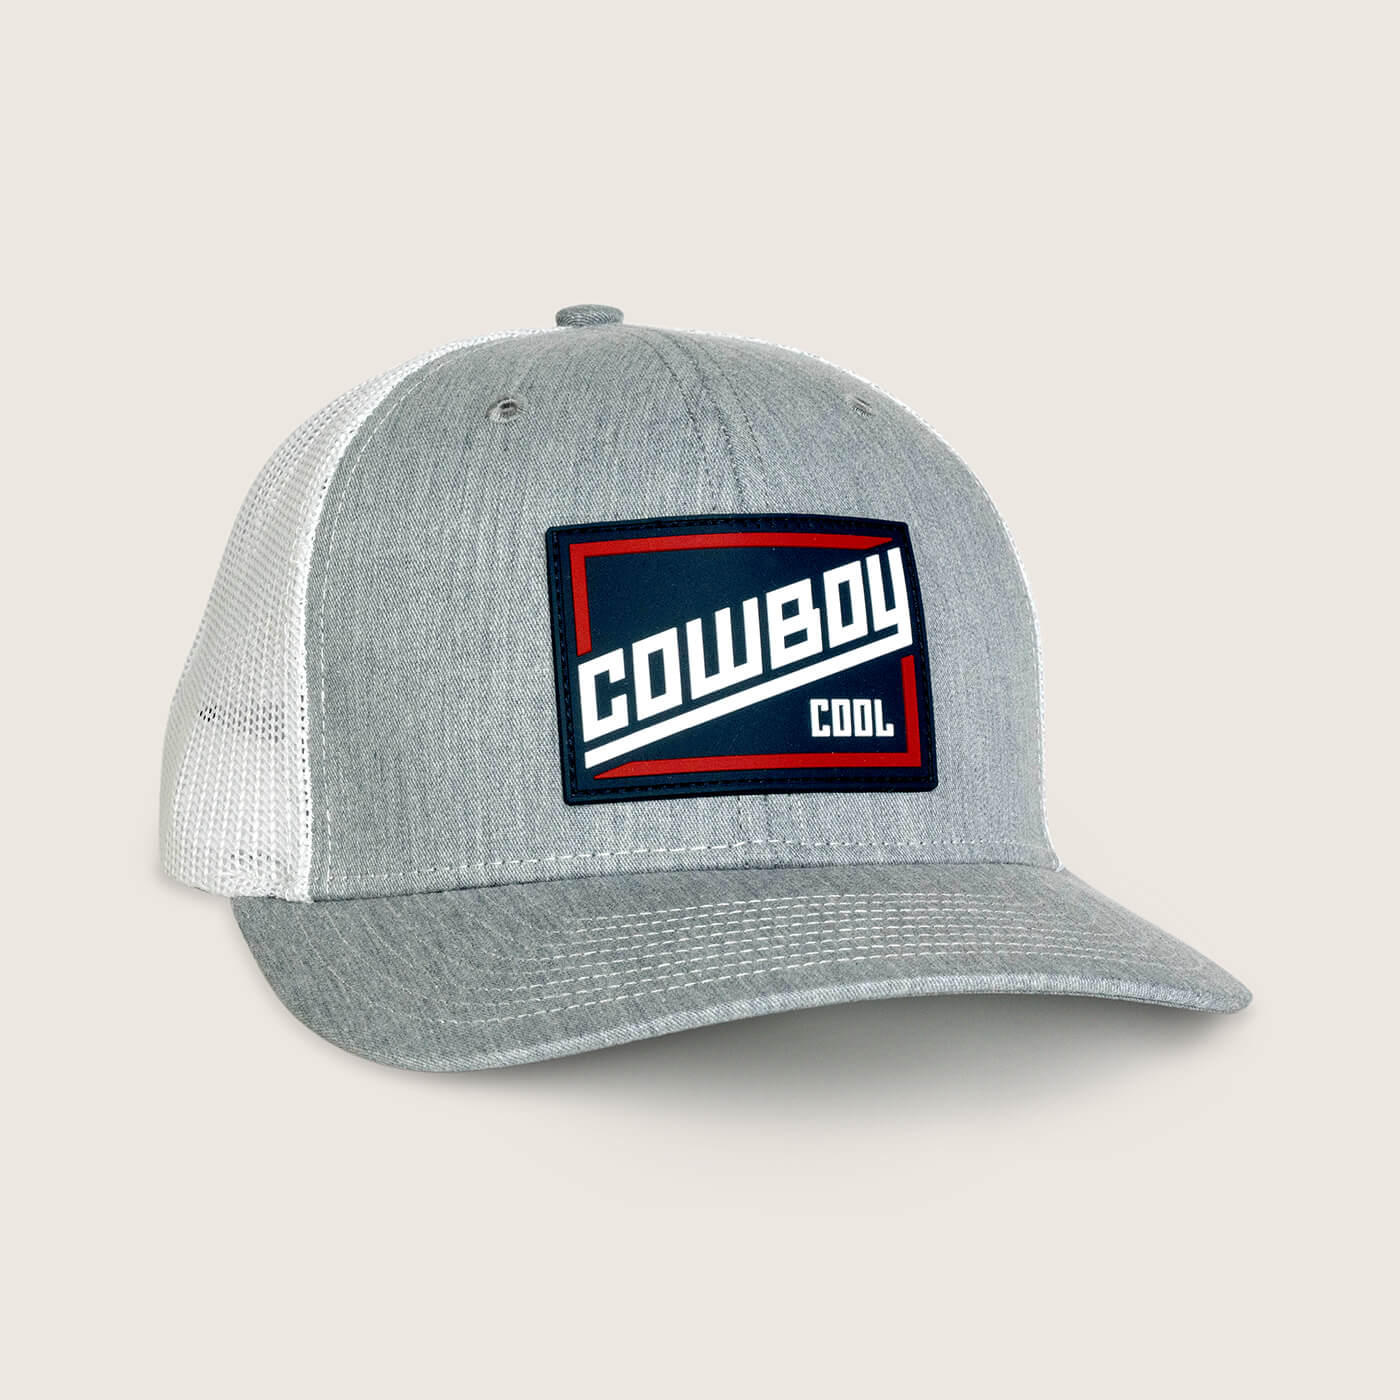 Cowboy Cool Hats OS Slant Hat